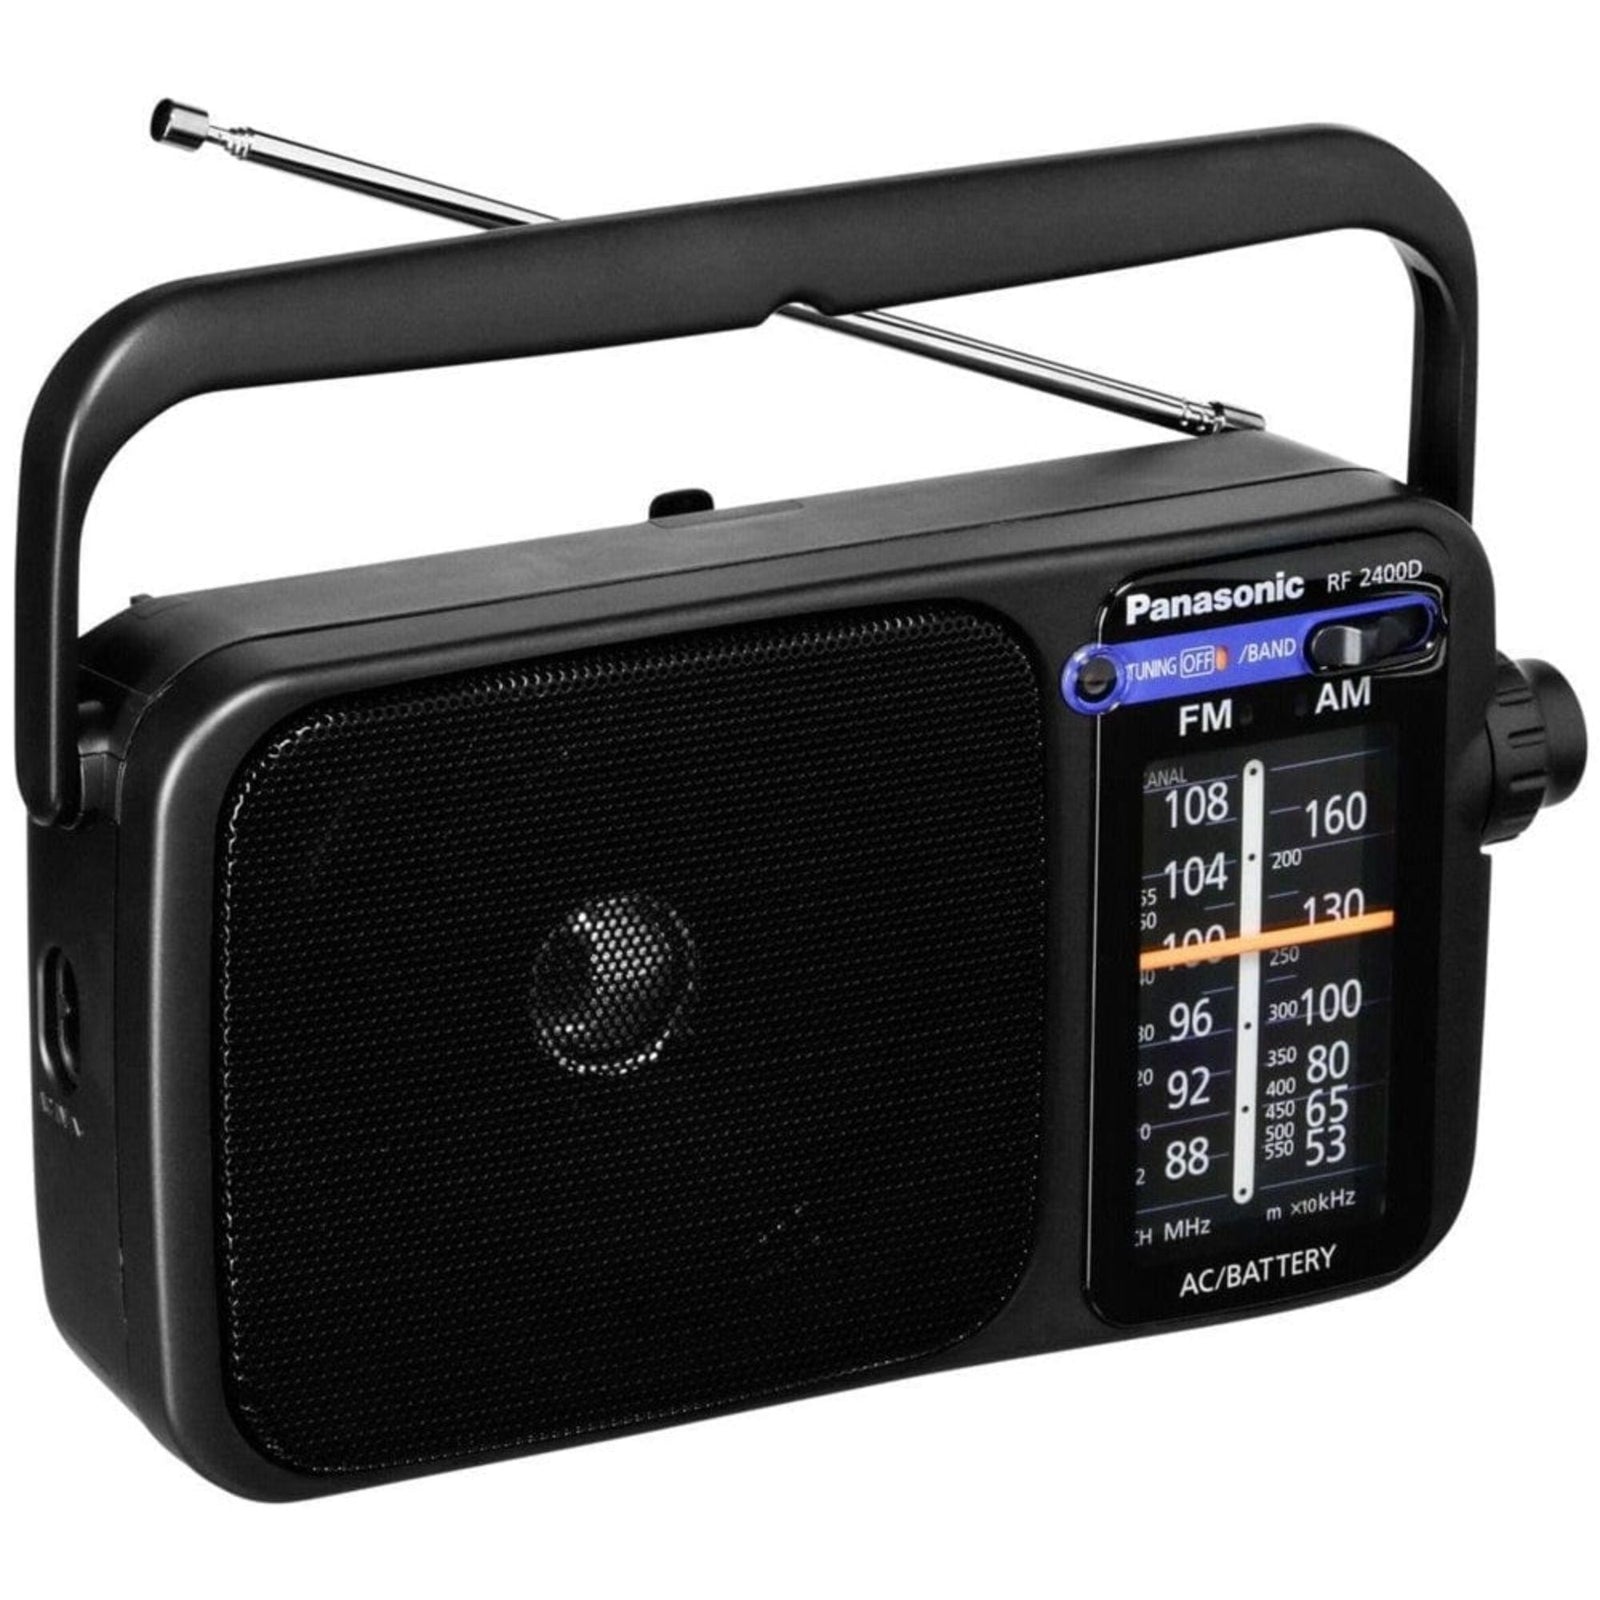 Panasonic Rf-2400d Digital Portable Radio Am/fm